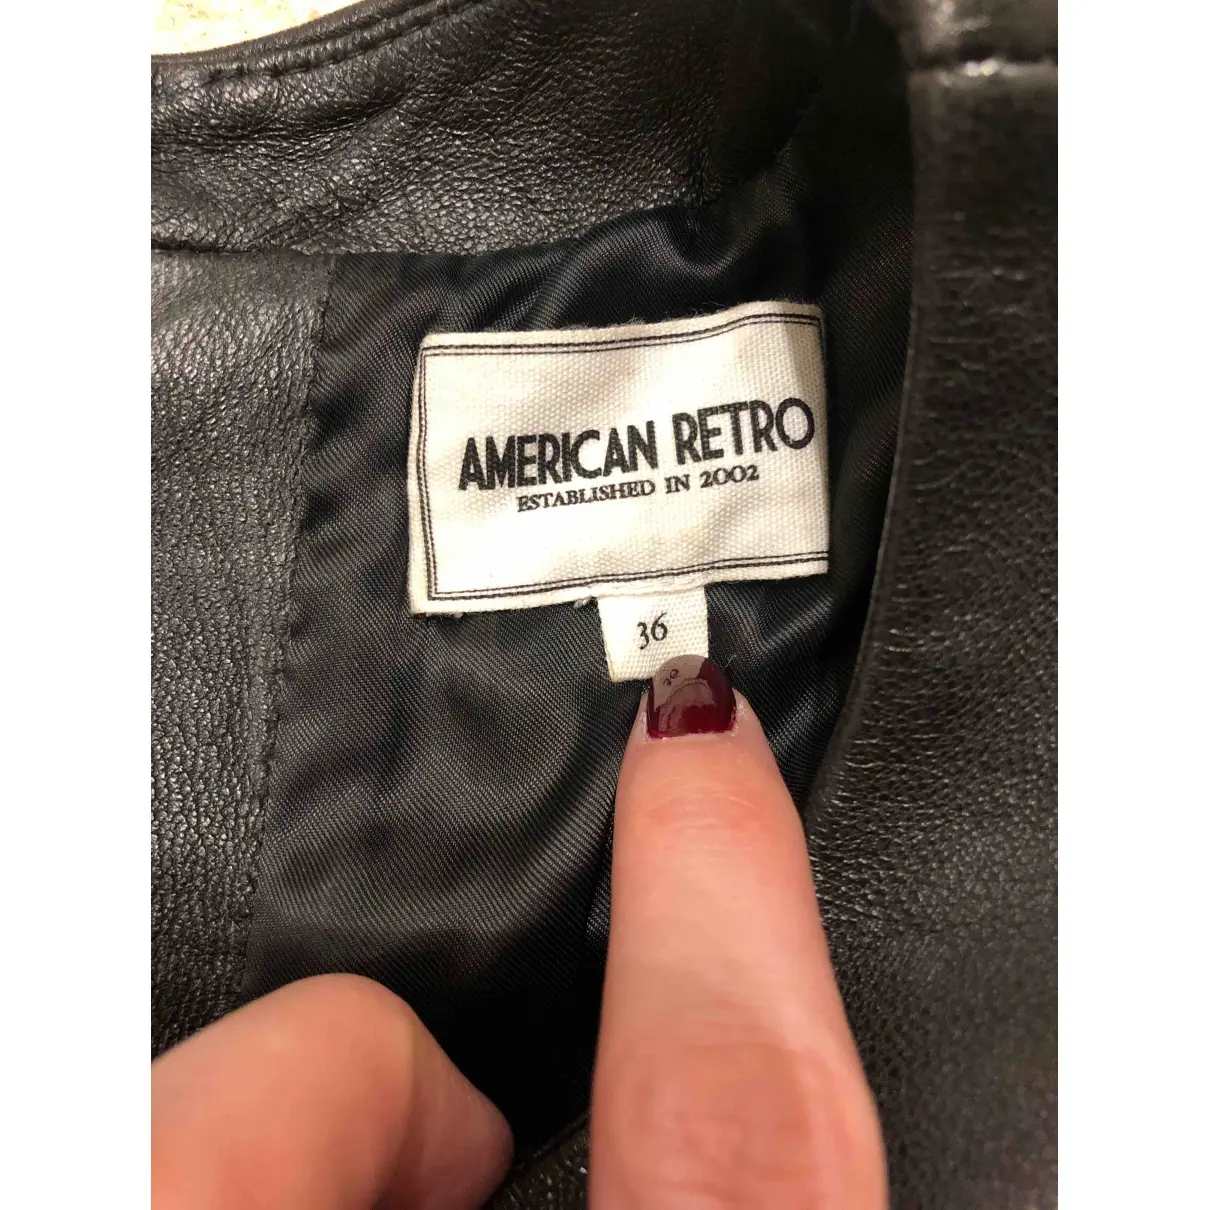 Buy American Retro Leather mini dress online